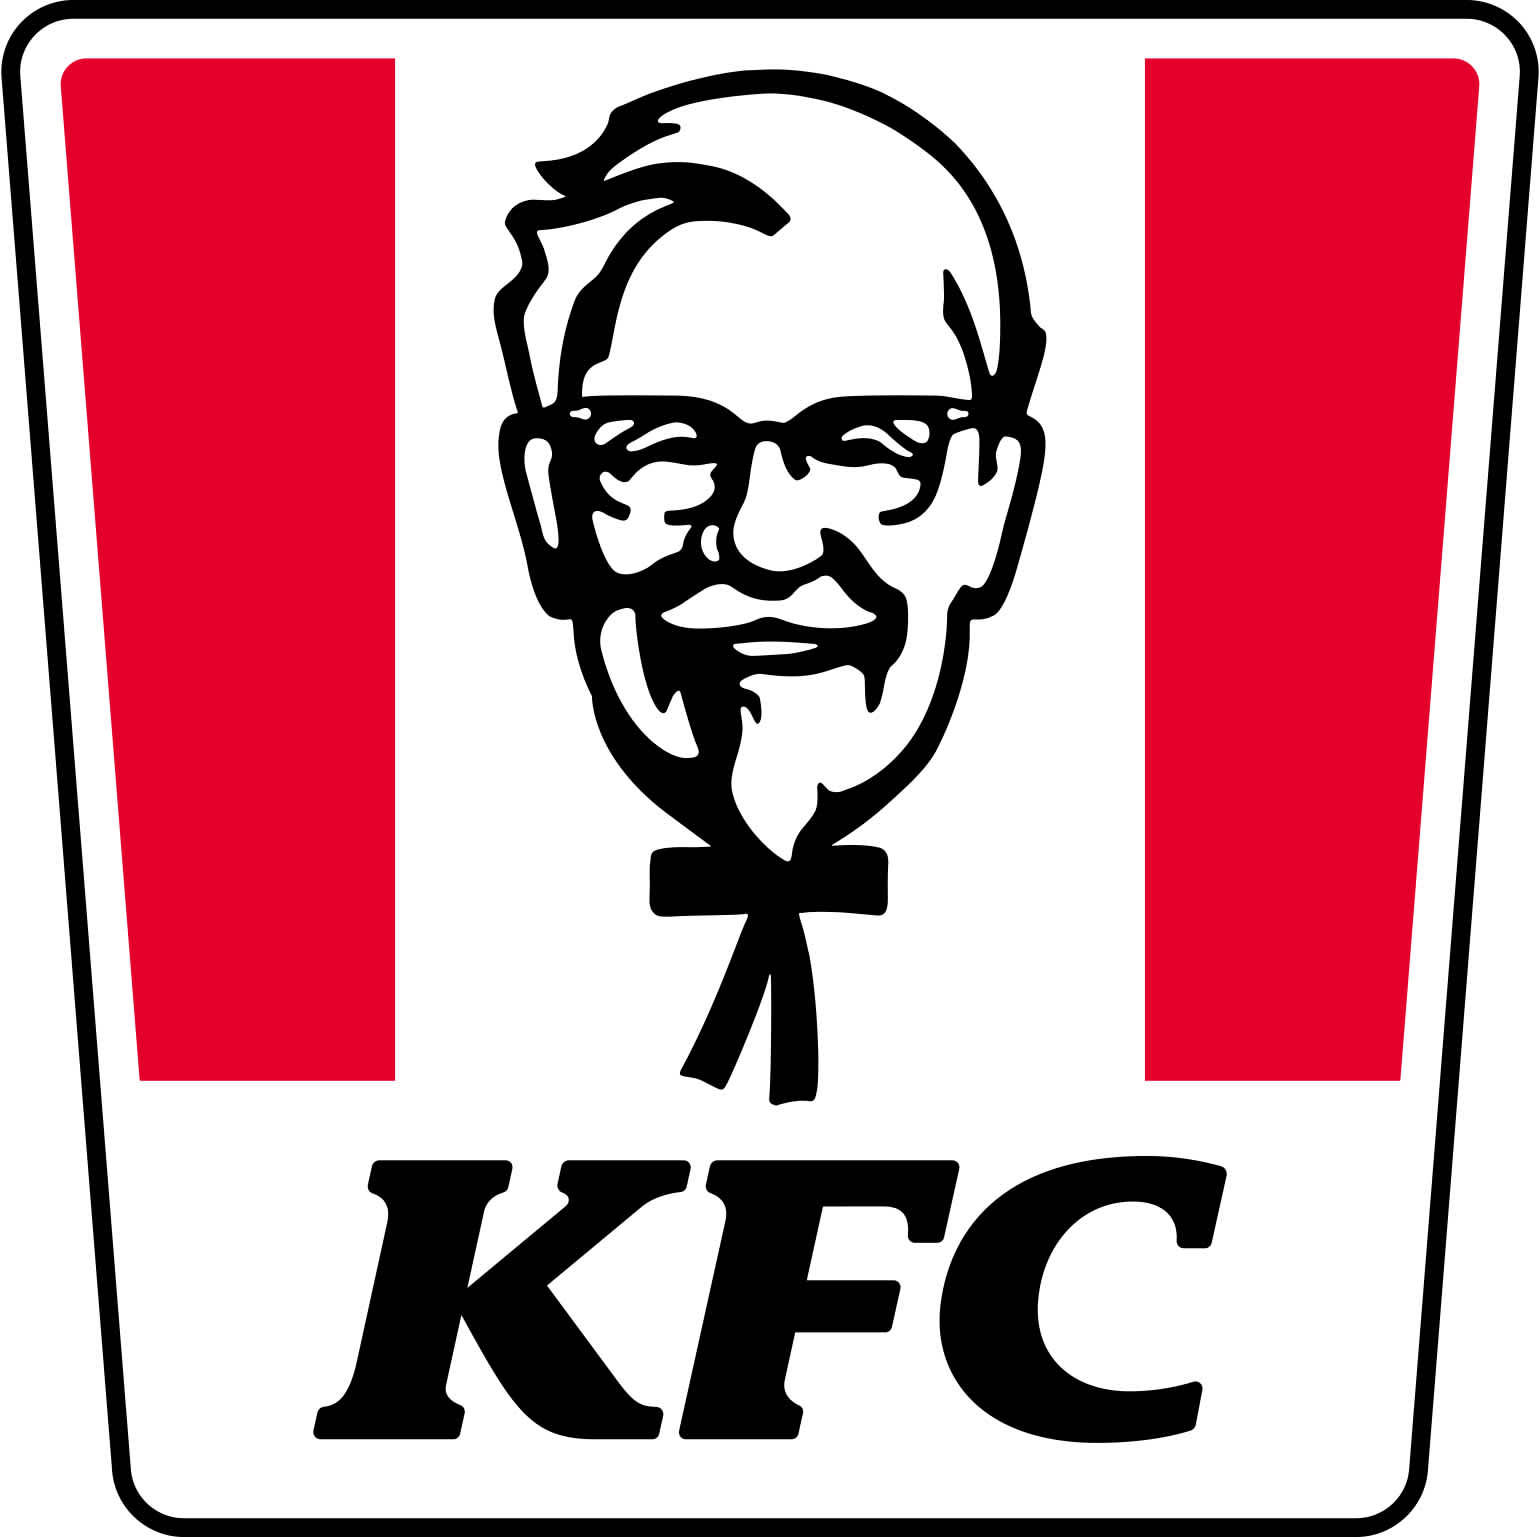 KFC T20 INTERNATIONAL SERIES PROMISES TO BE BUCKET LOADS OF FUN